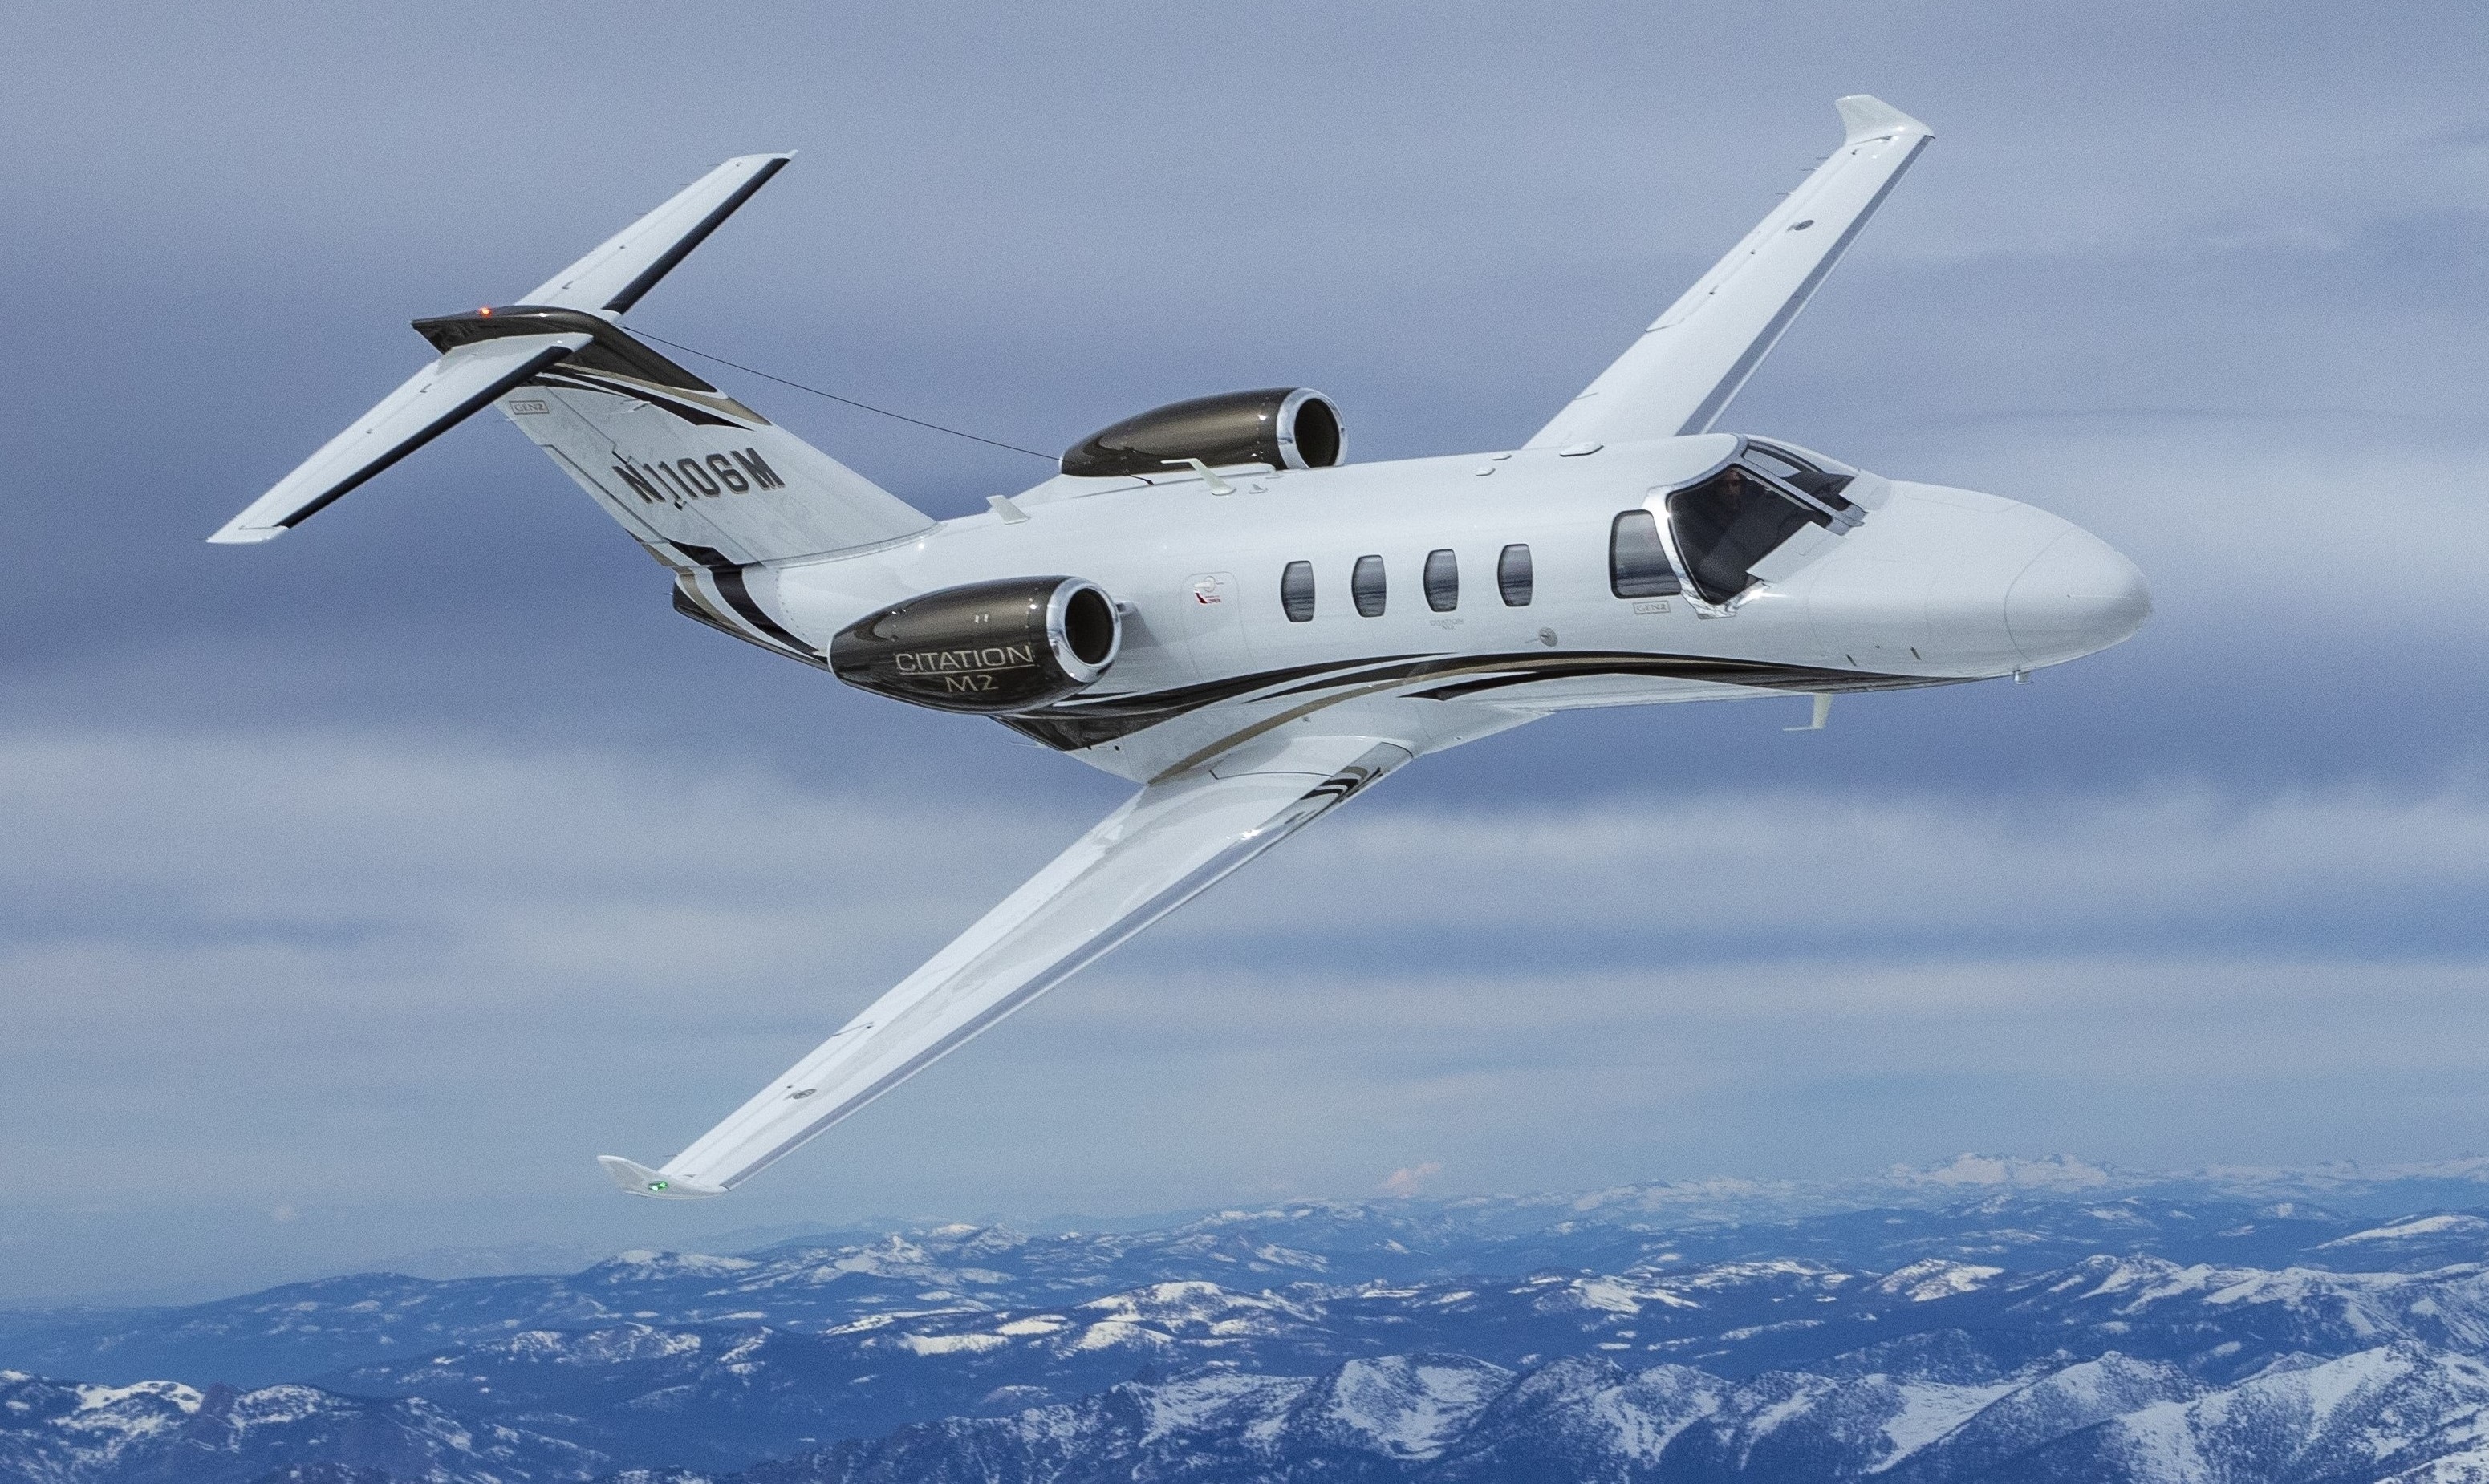 Textron Aviation adds  Garmin Autothrottle system to the Cessna Citation M2 Gen2.